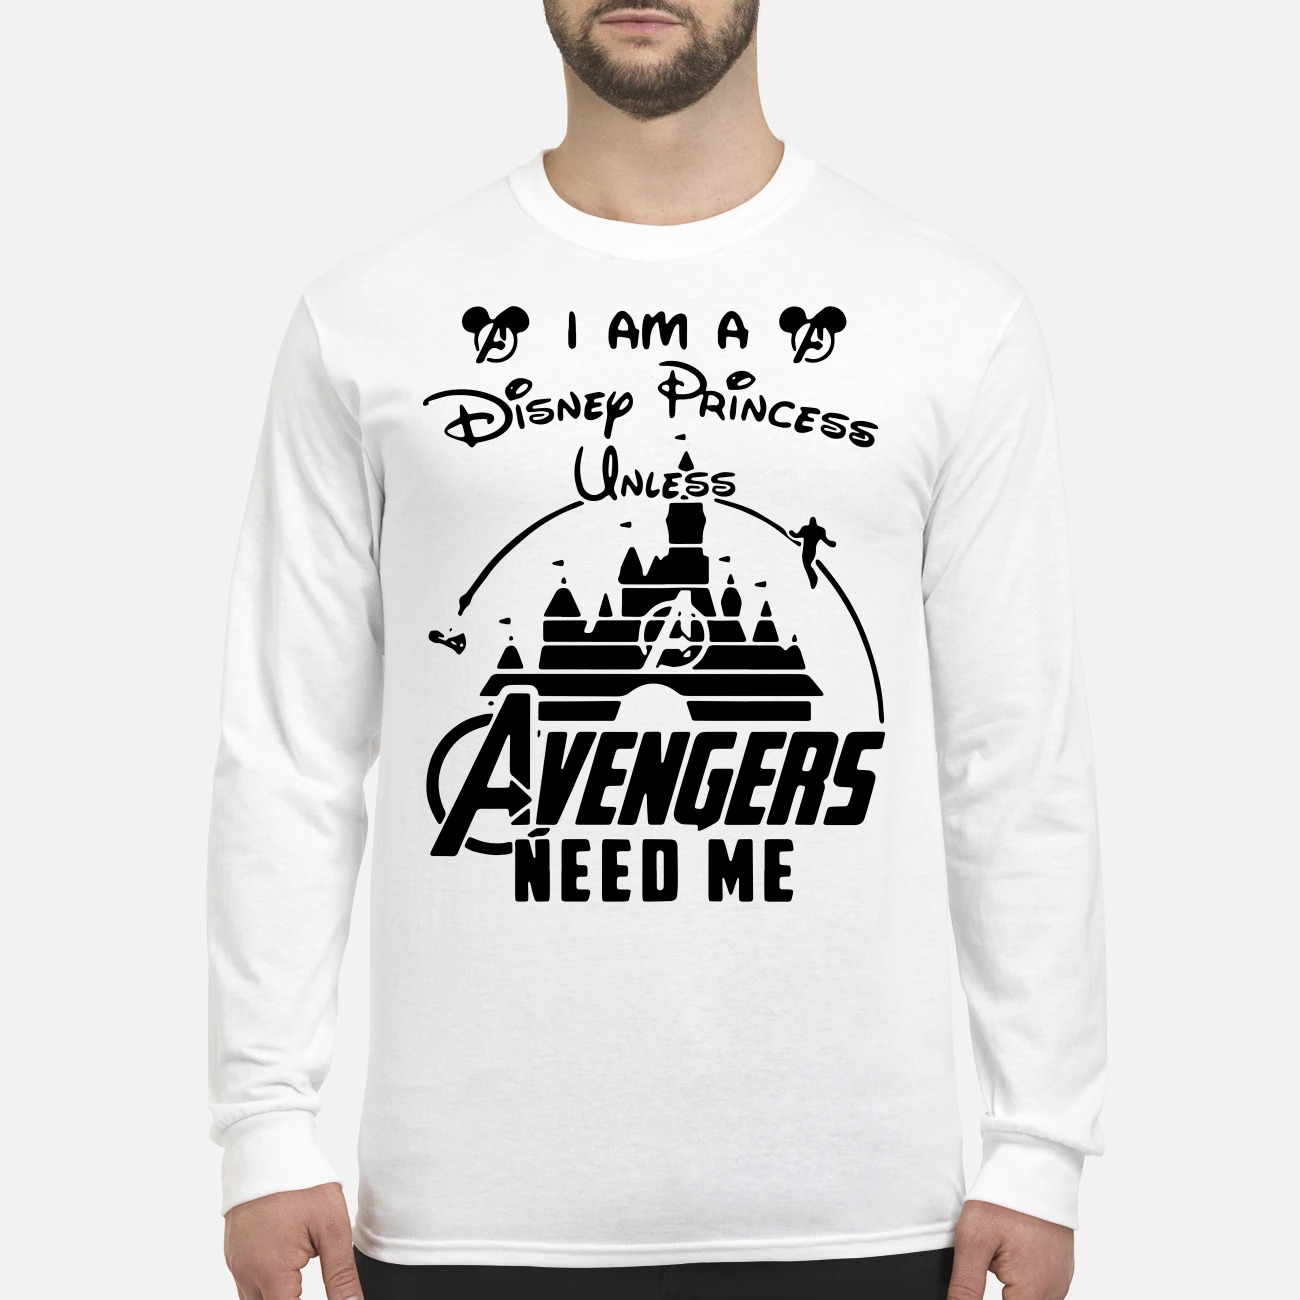 I am a Disney Princess unless Avengers need me men's long sleeved shirt